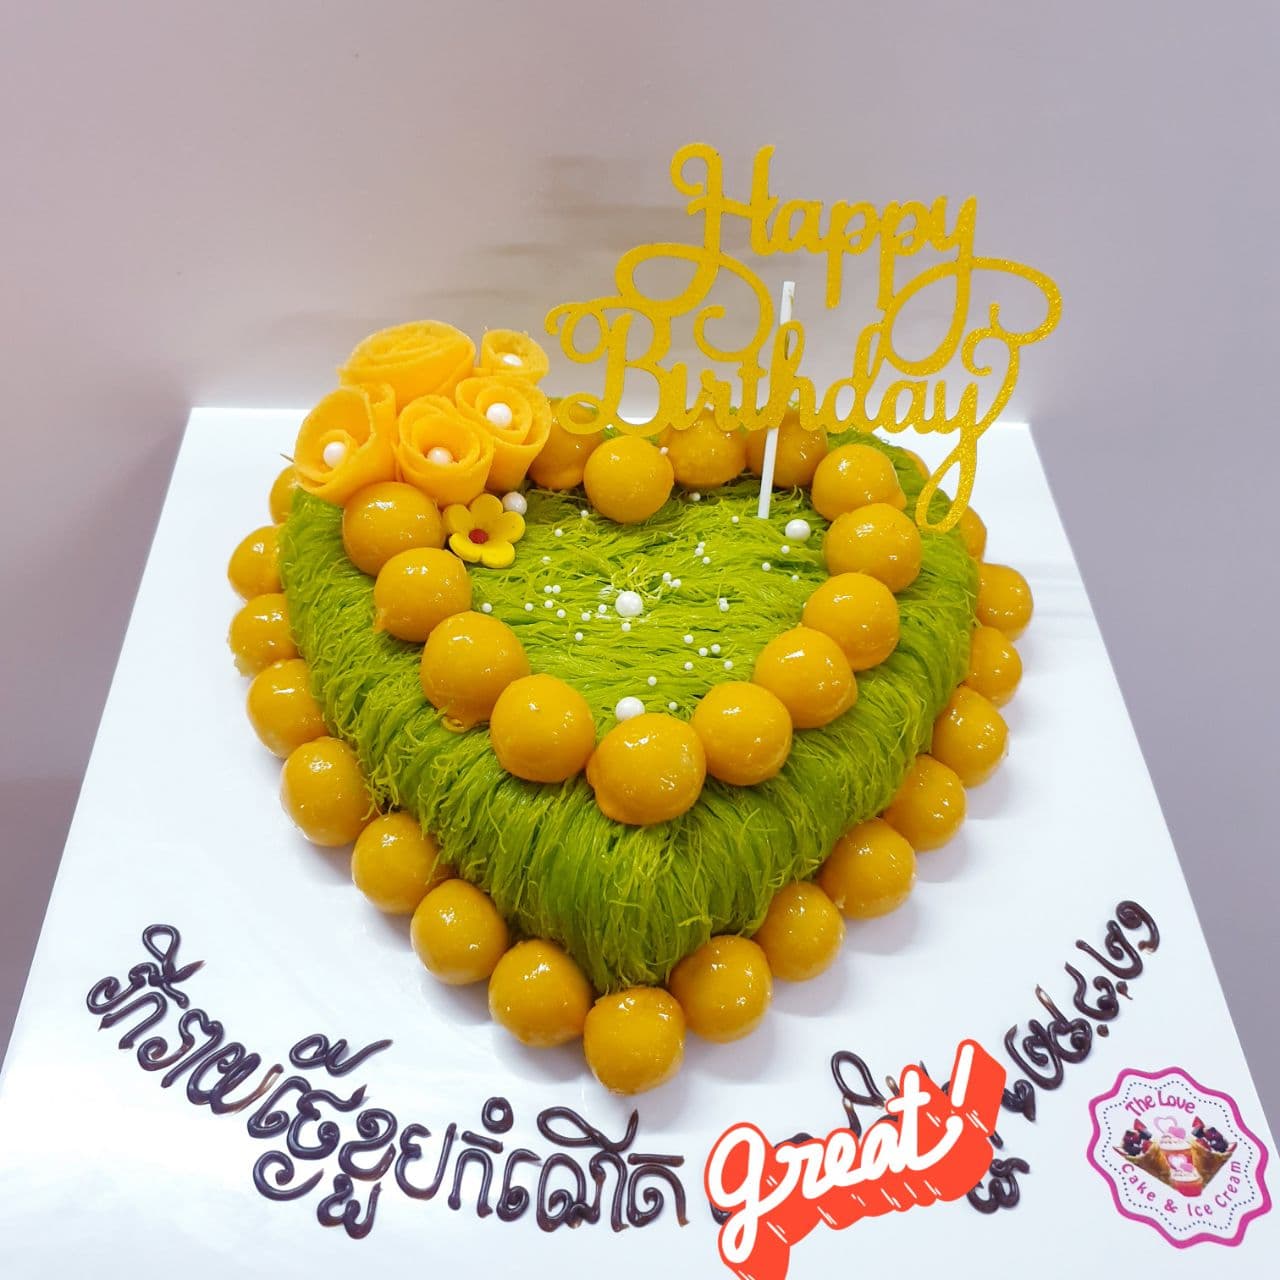 05.Heart-shaped green fiber cake